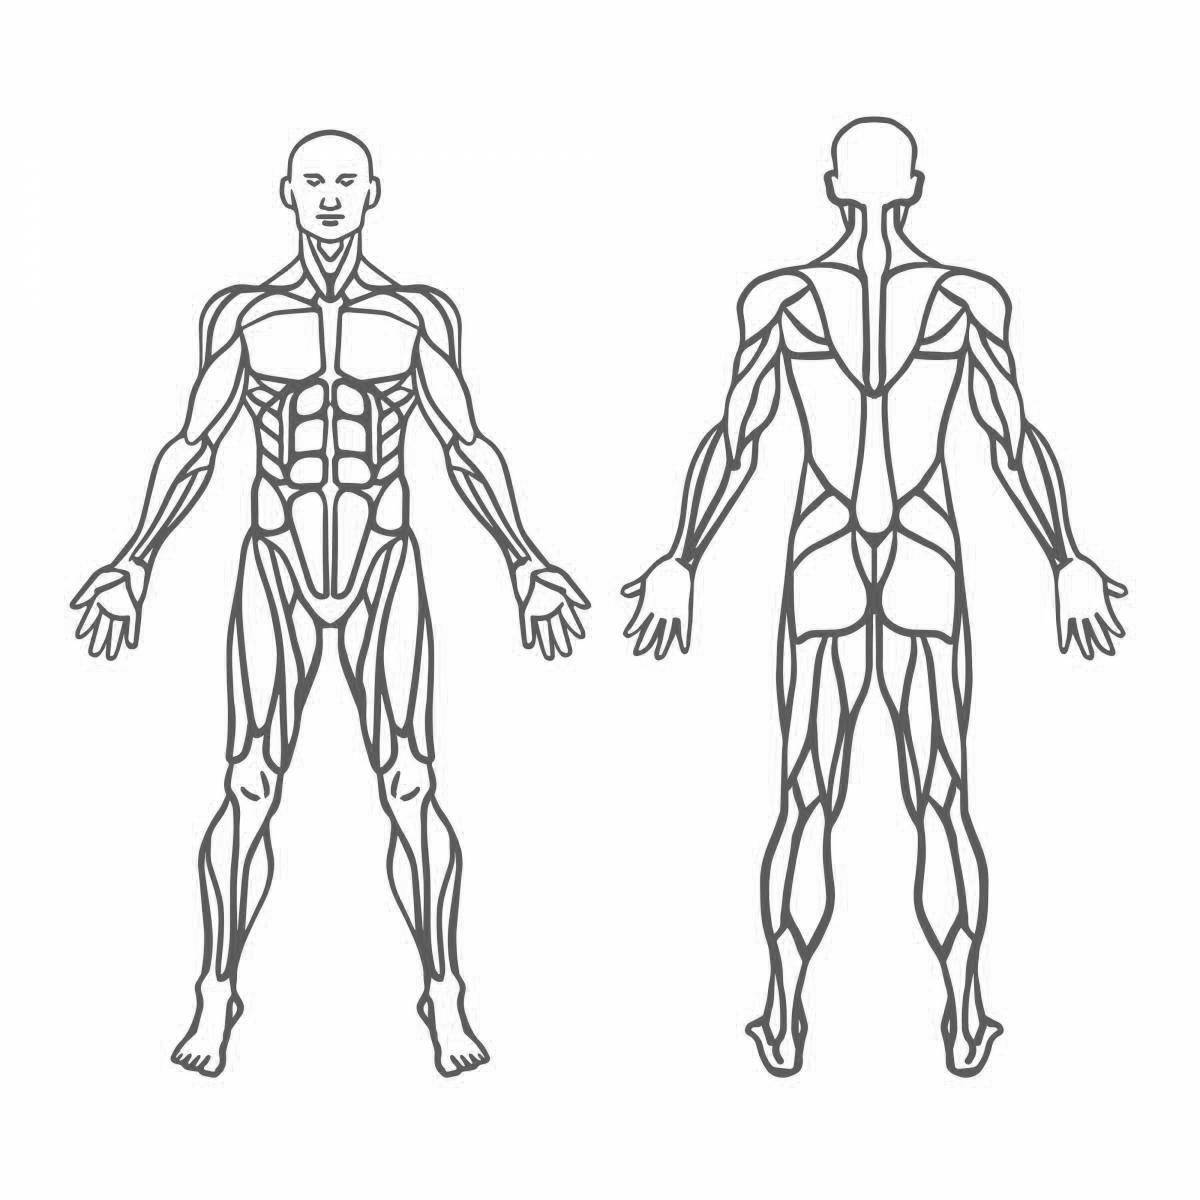 Мышцы человека